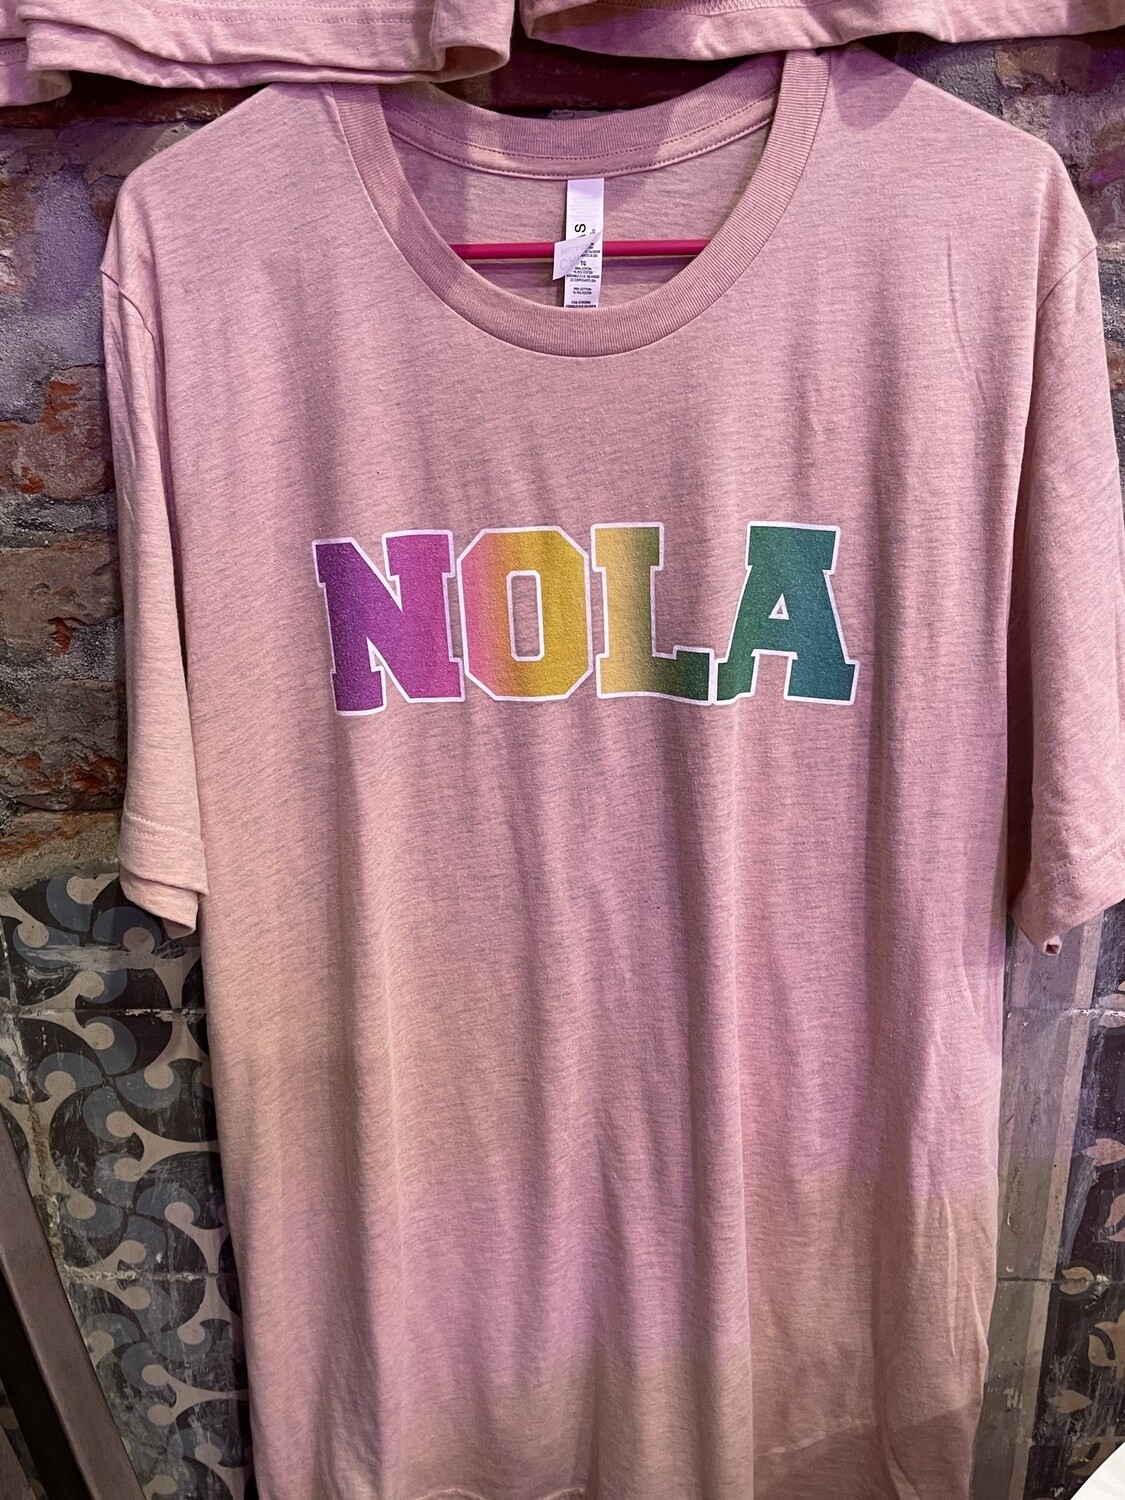 NOLA - Mardi Gras T-Shirt